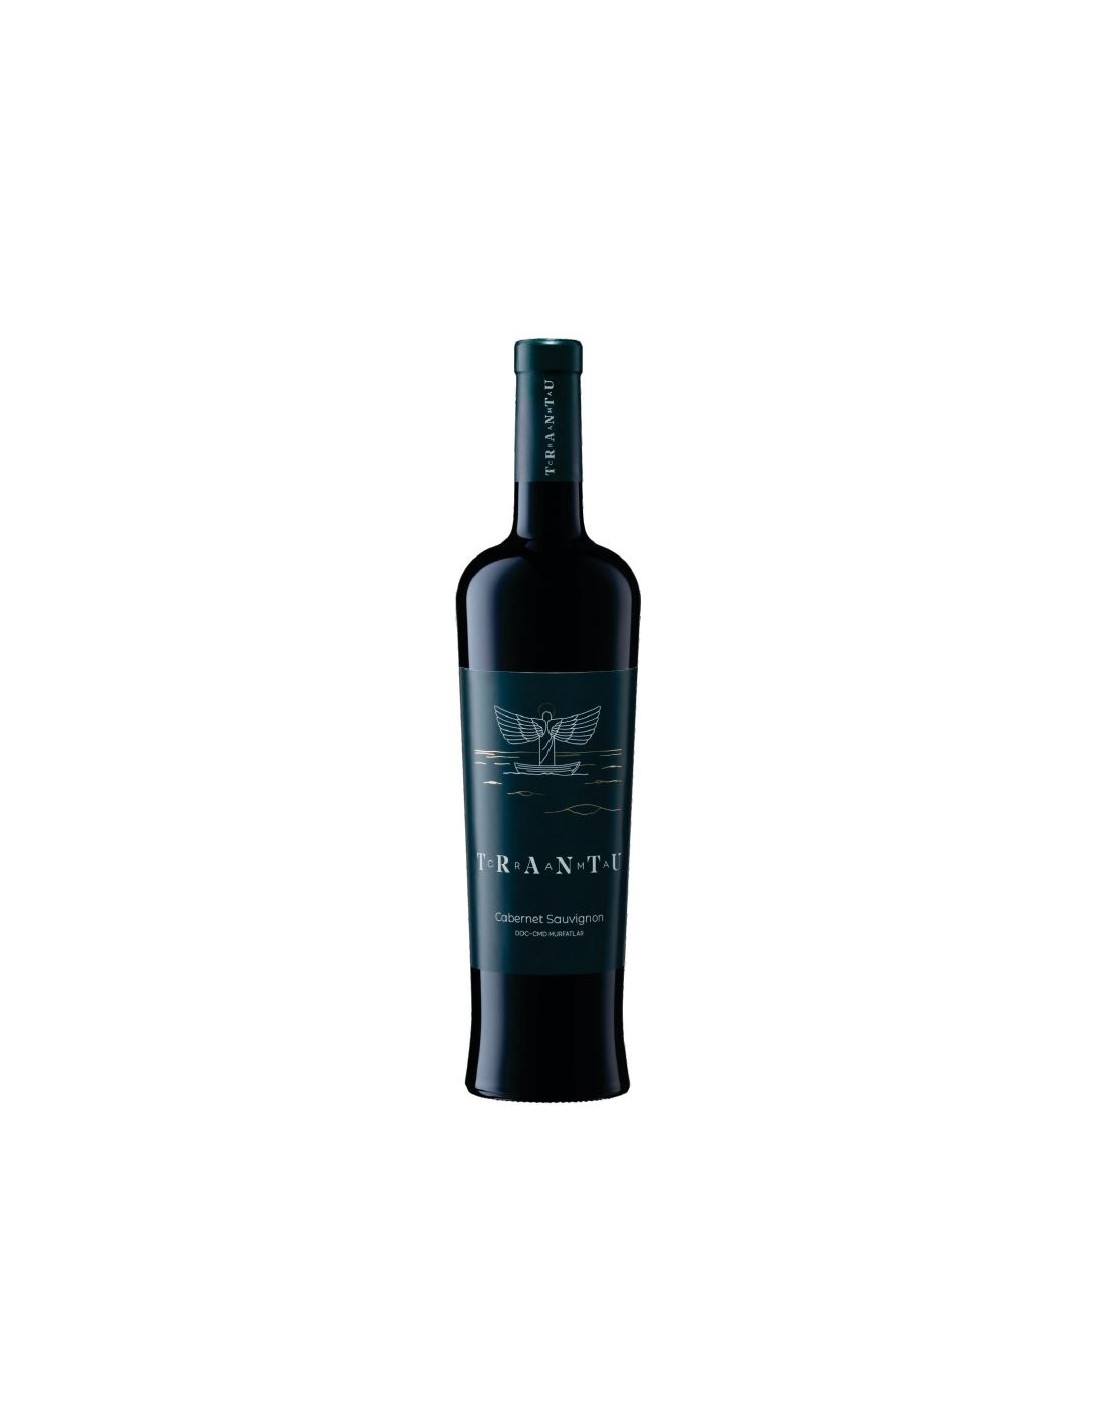 Vin rosu sec, Cabernet Sauvignon, Crama Trantu Murfatlar, 0.75L, 13% alc., Romania alcooldiscount.ro